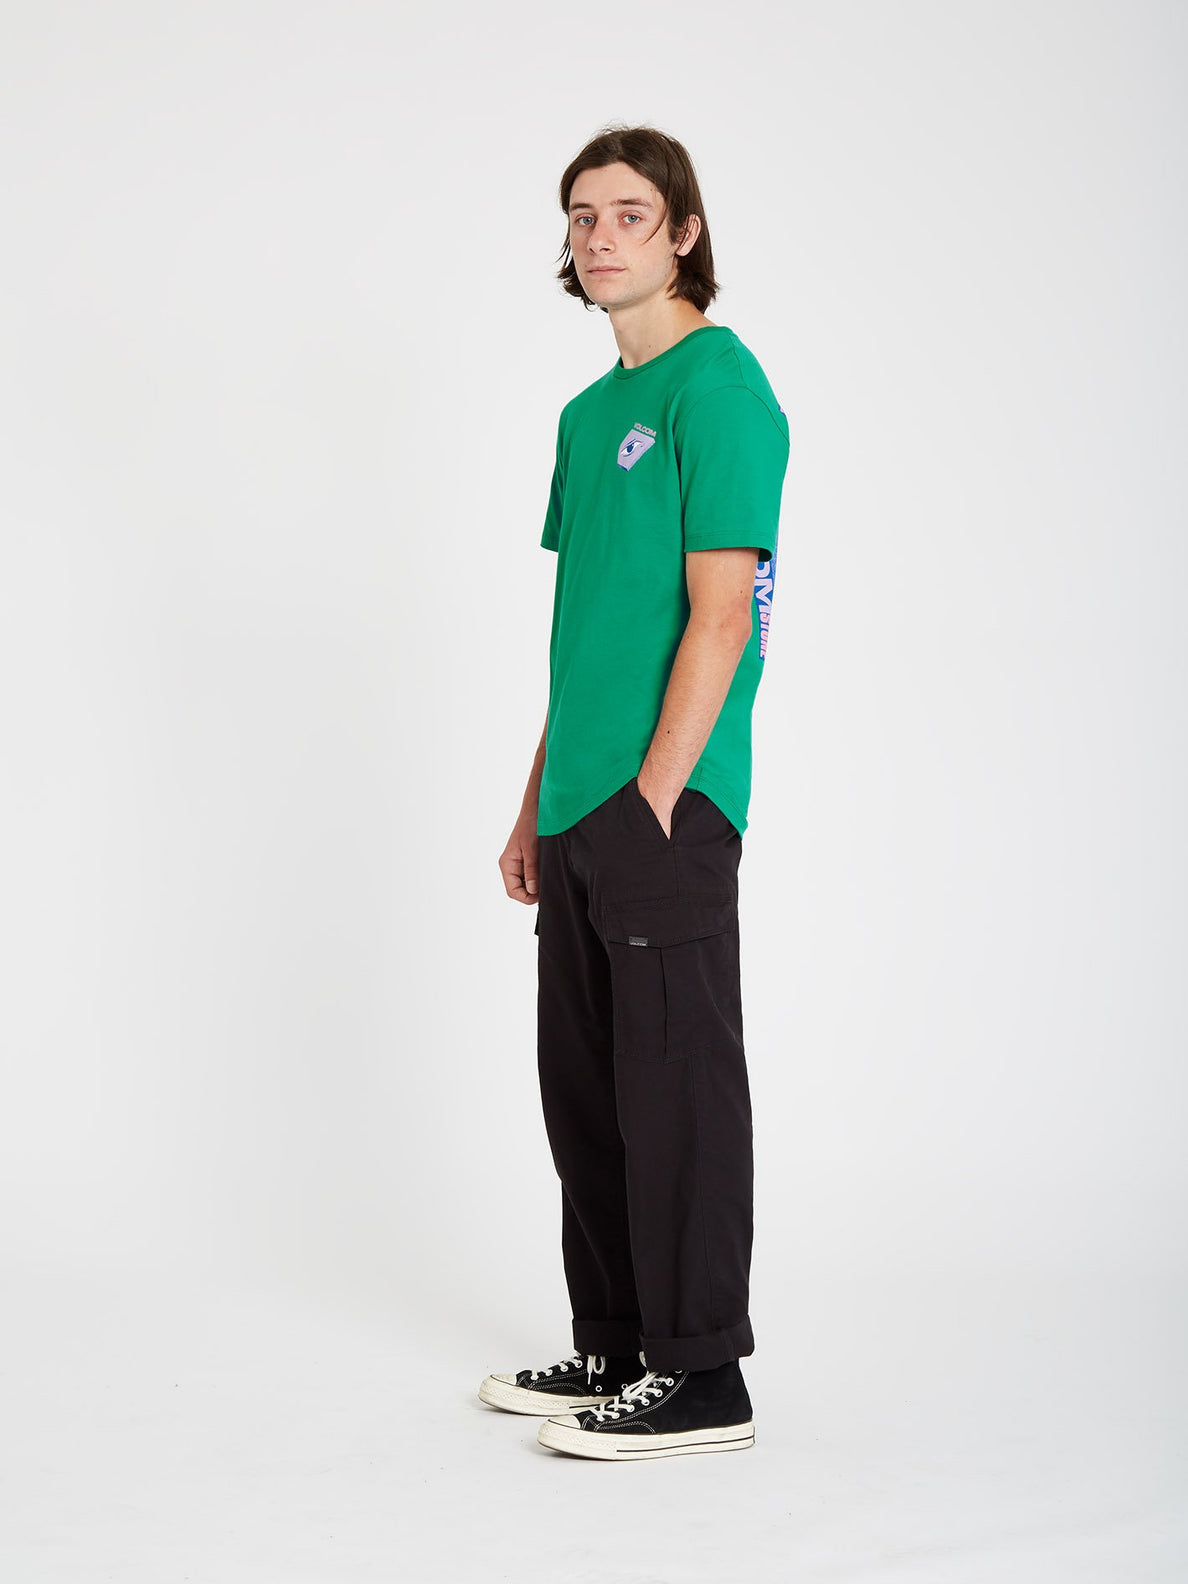 M. Loeffler 2 T-shirt - Synergy Green (A5212115_SYG) [20]